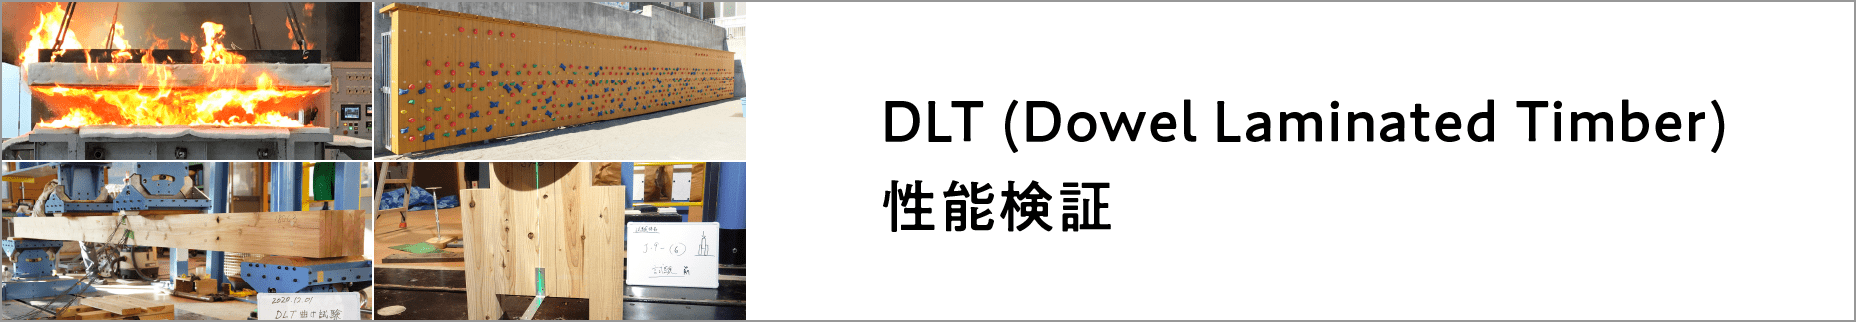 DLT(Dowel Laminated Timber)性能検証